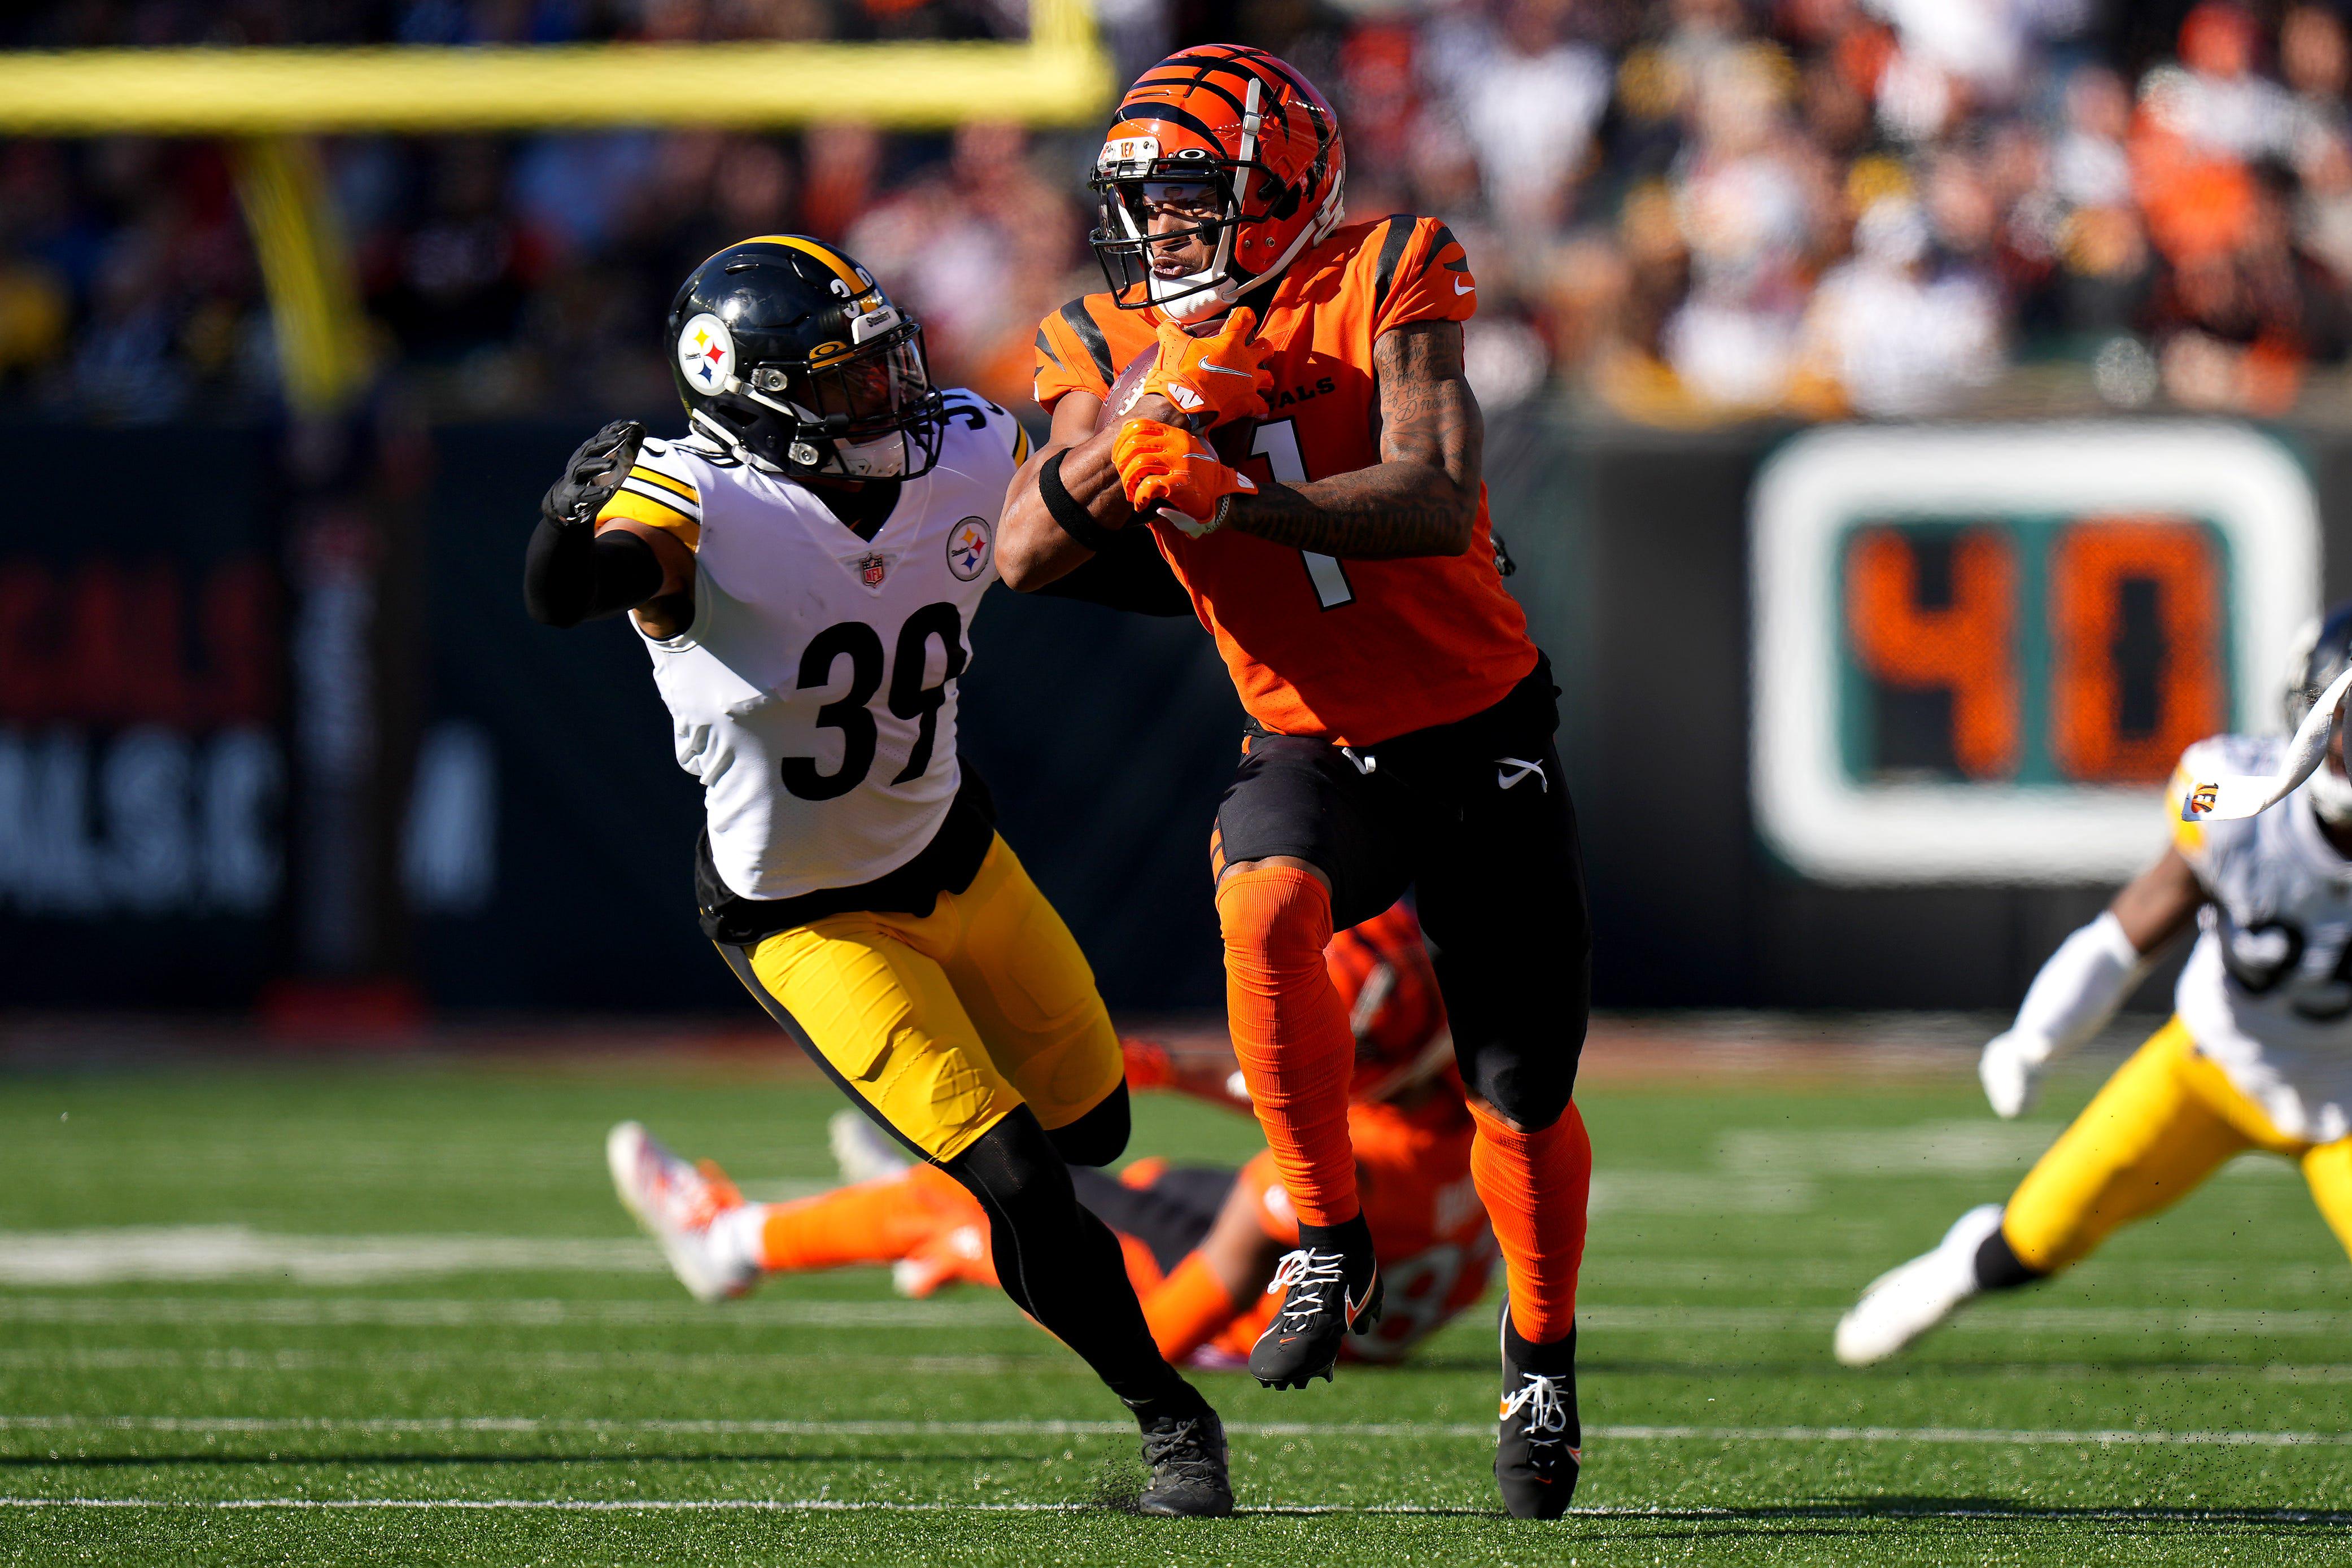 Steelers vs Bengals Opening Odds For NFL Week 1 Show Clear Favorite on FanDuel Sportsbook